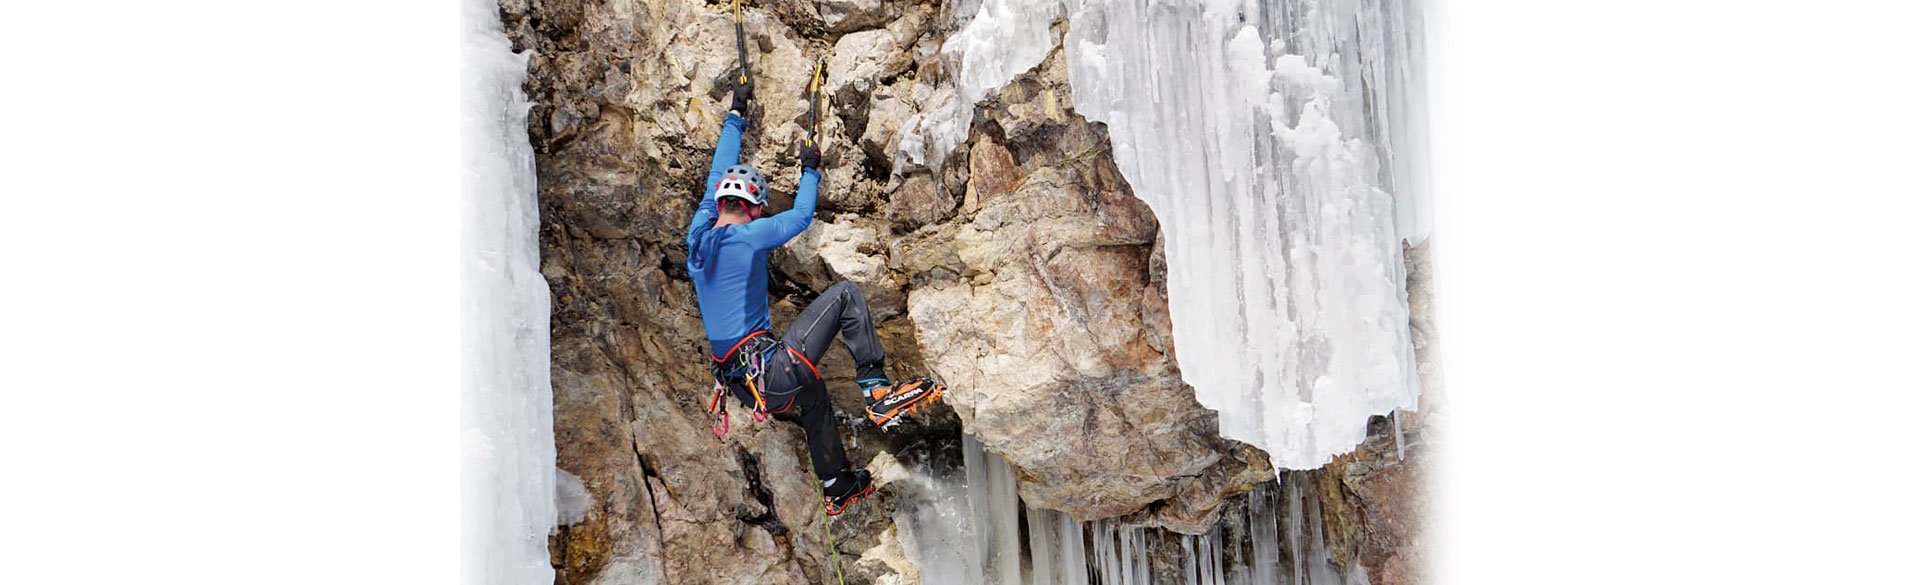 CU College of Nursing Student Ian Overton Ice climbing in Colorado